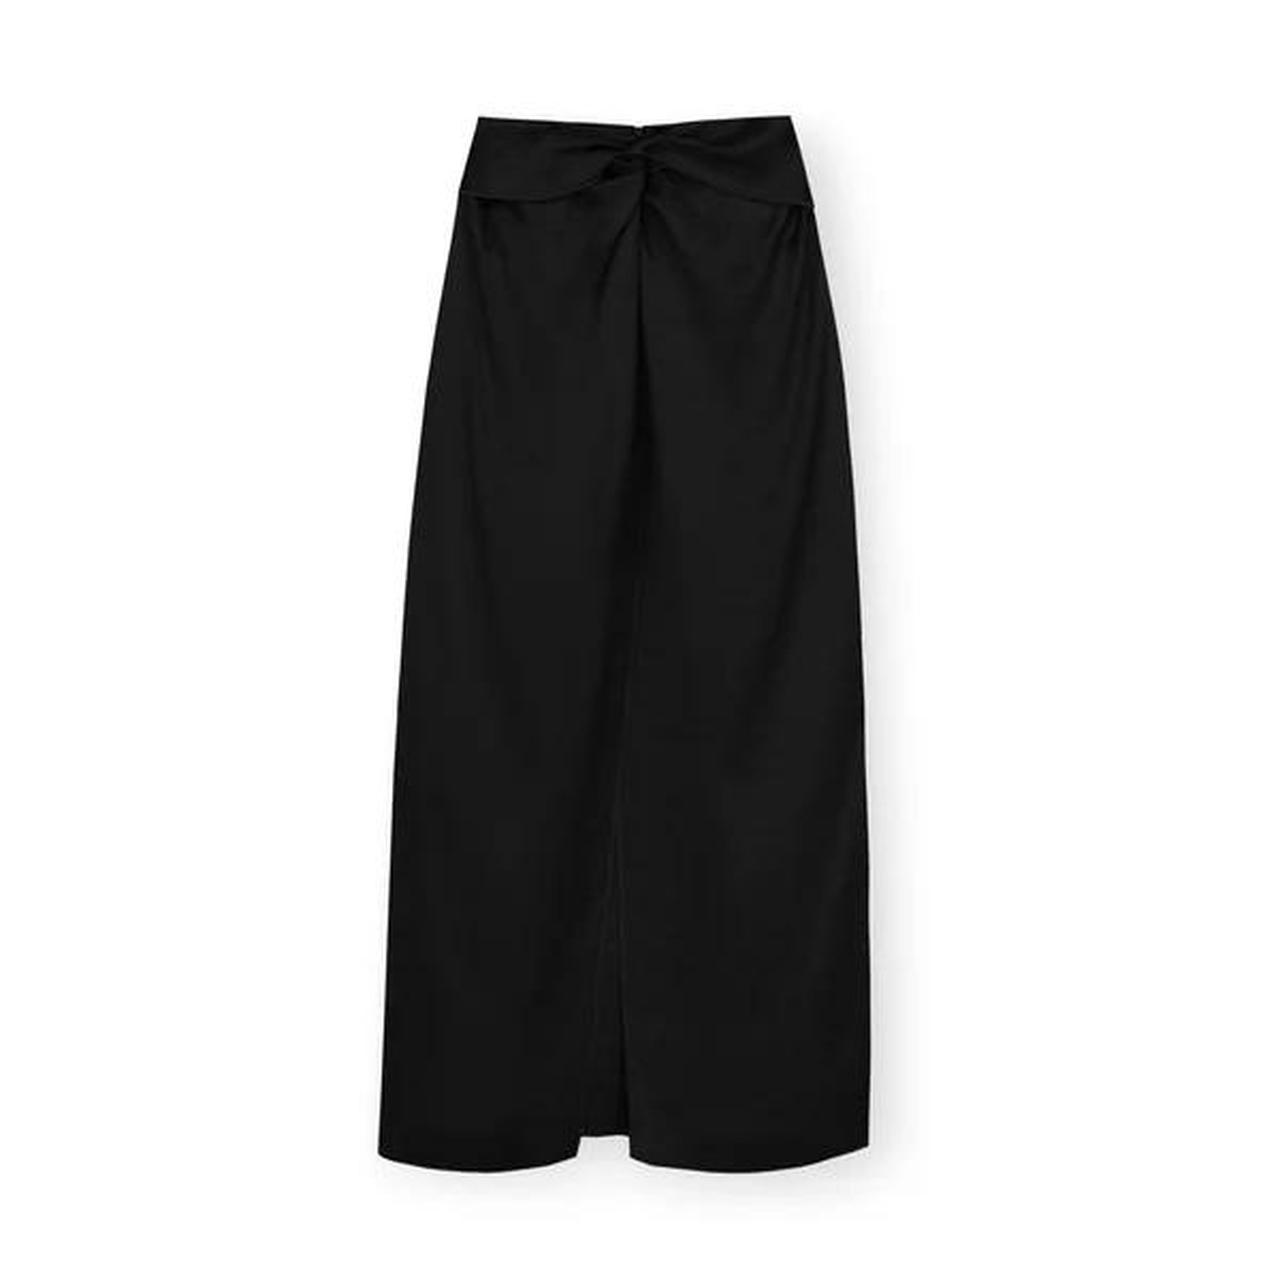 Nanushka Women's Black Skirt (4)